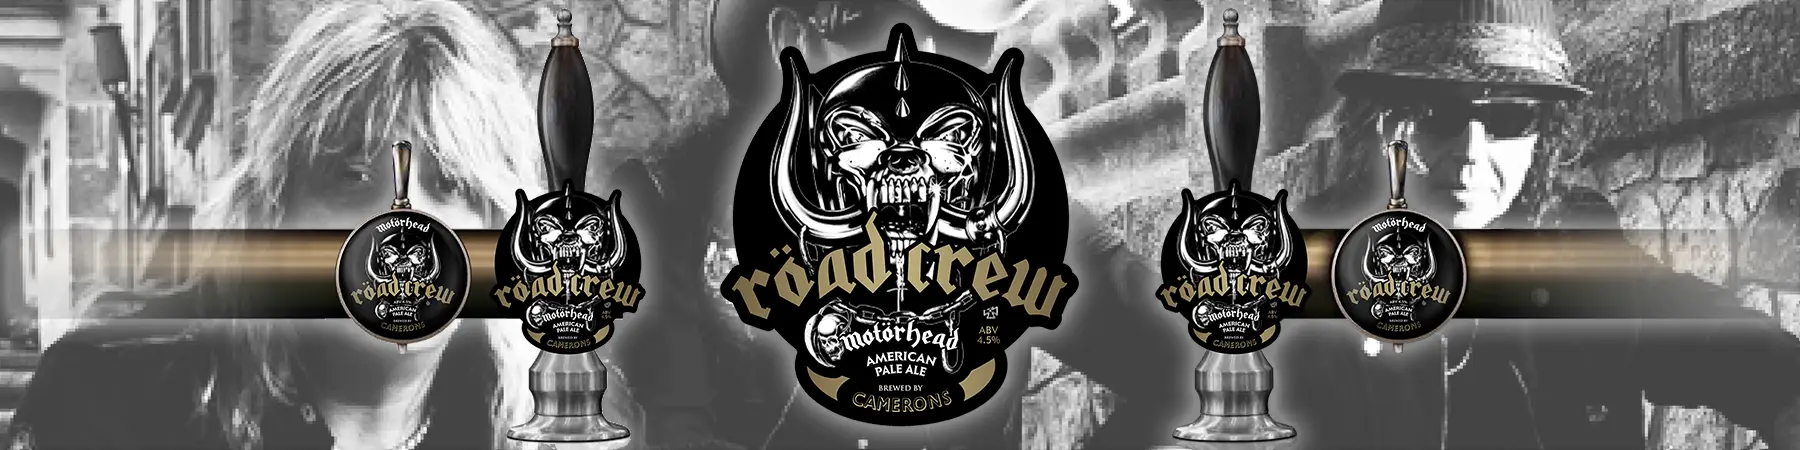 Motörhead road crew with logo